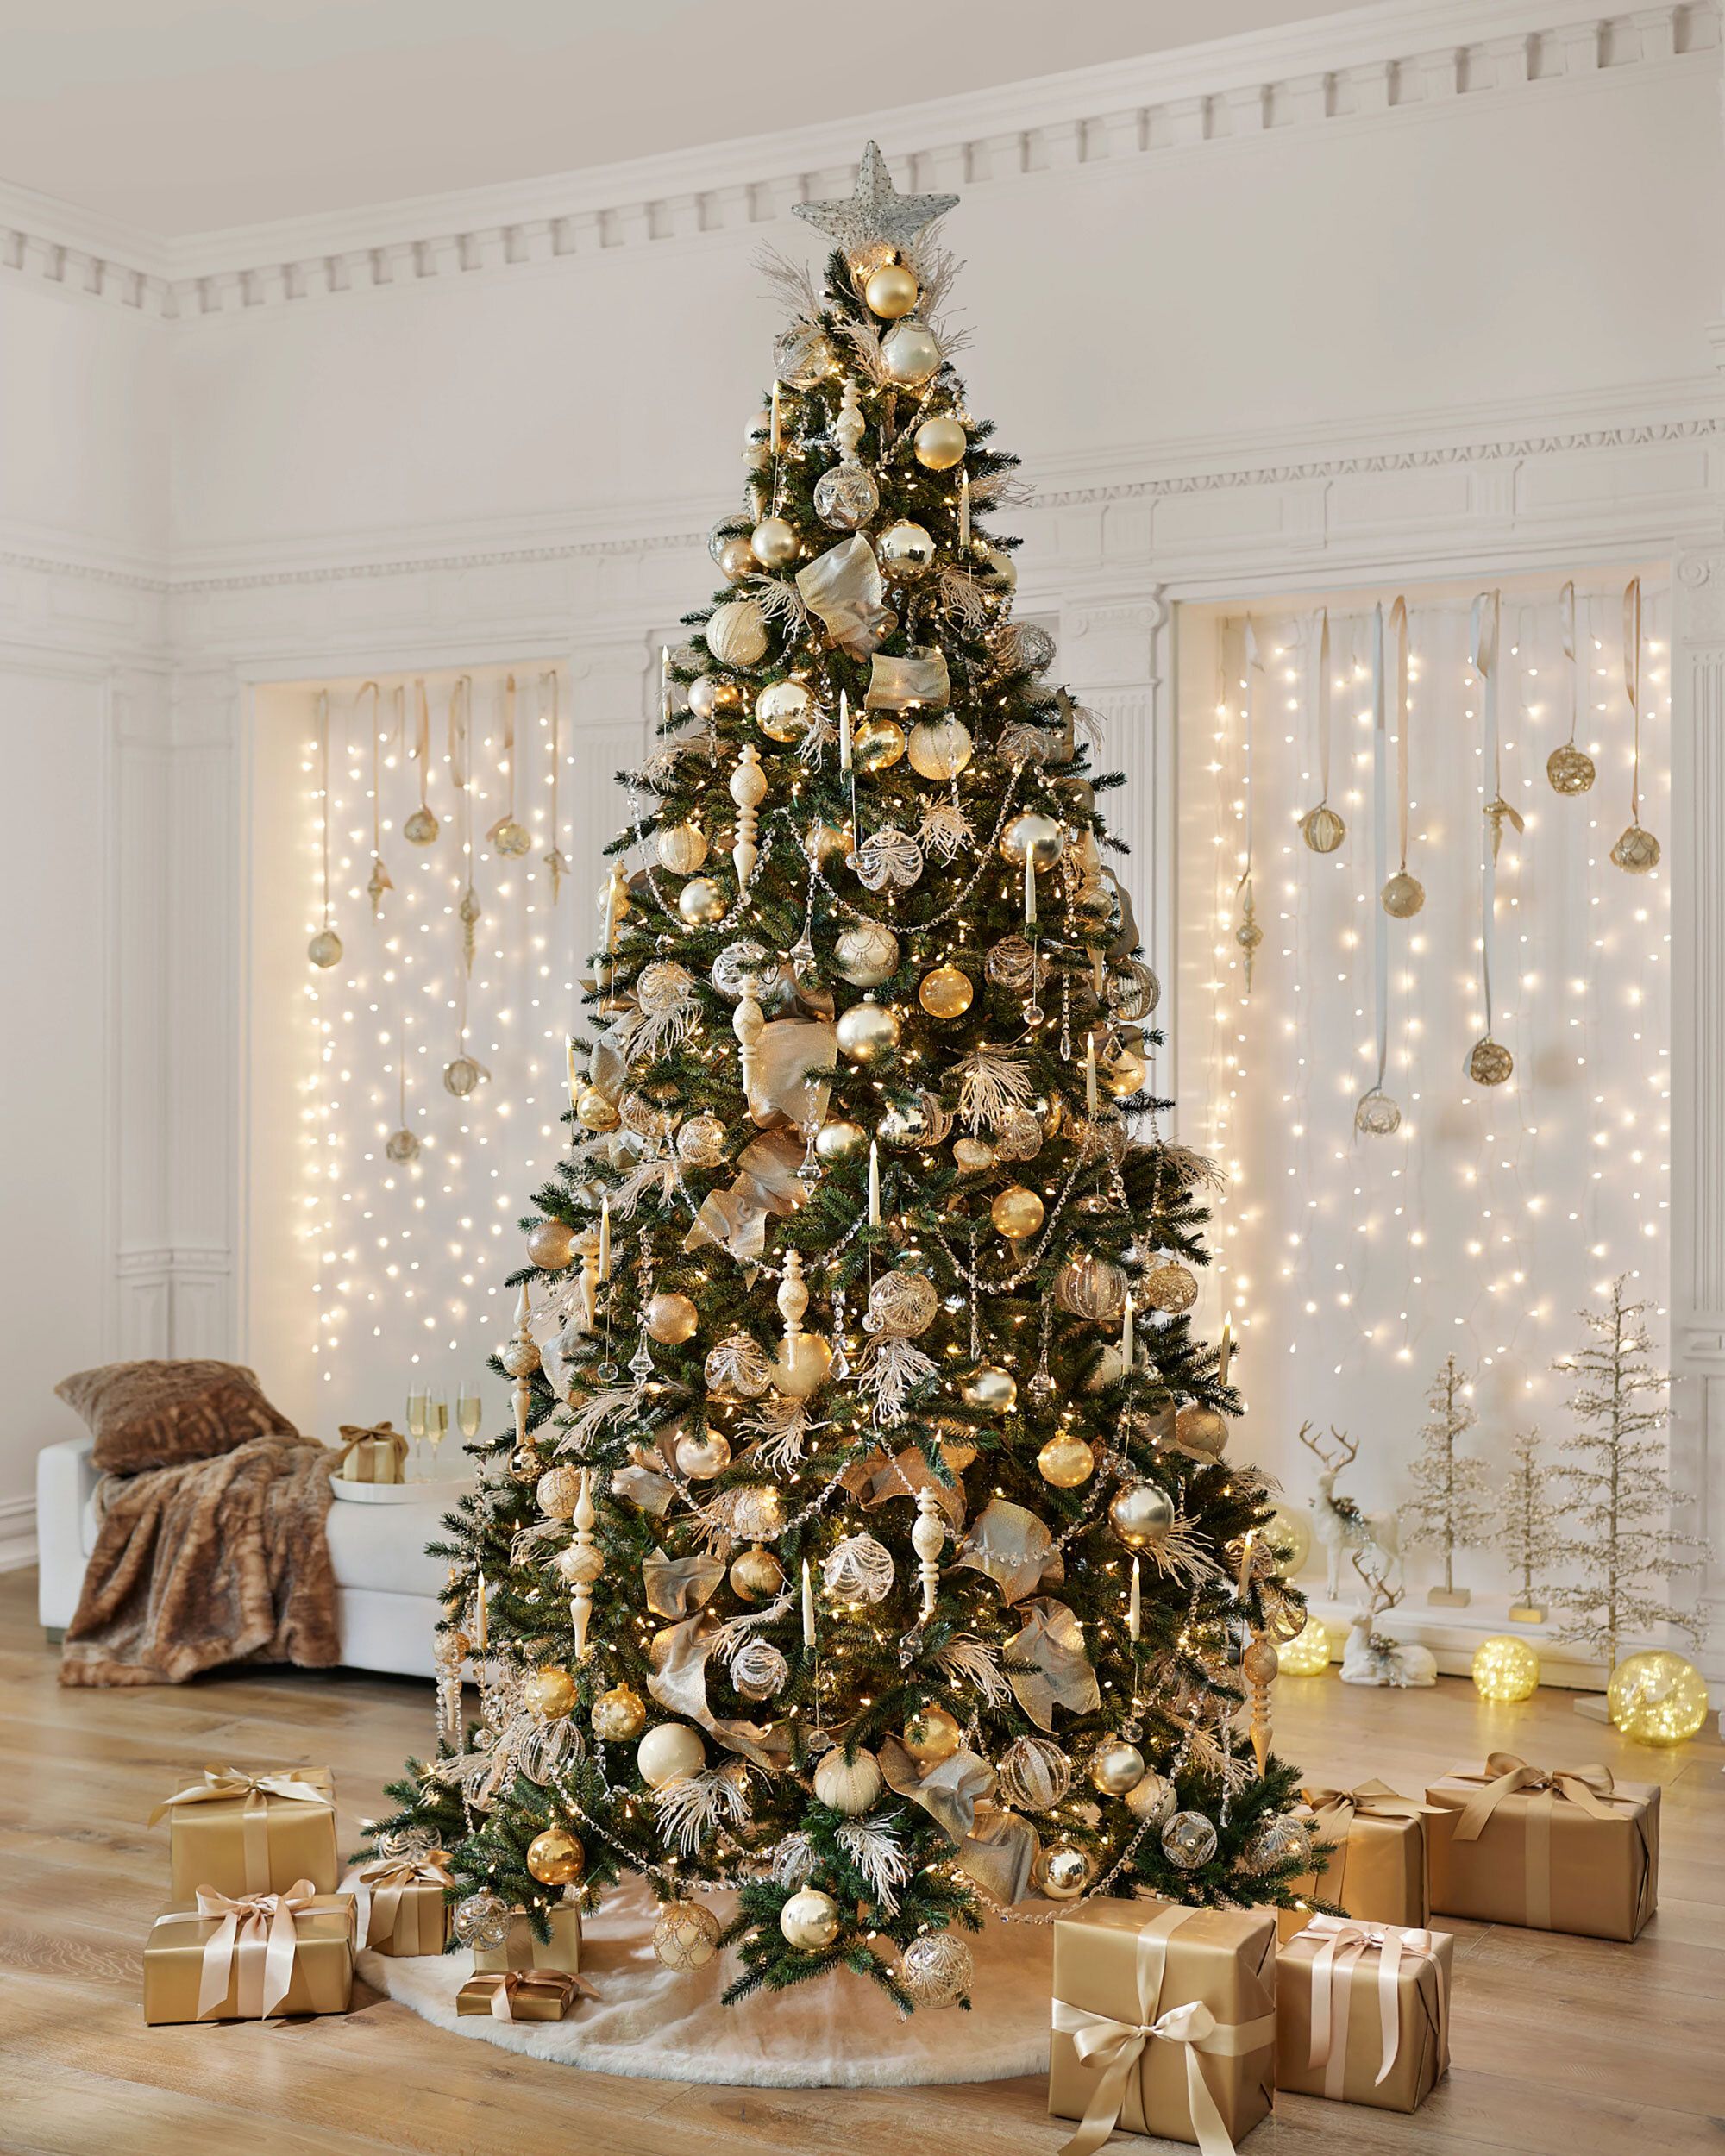 Webelkart Premium Christmas Decorations Items for Home Door Wall Xmas